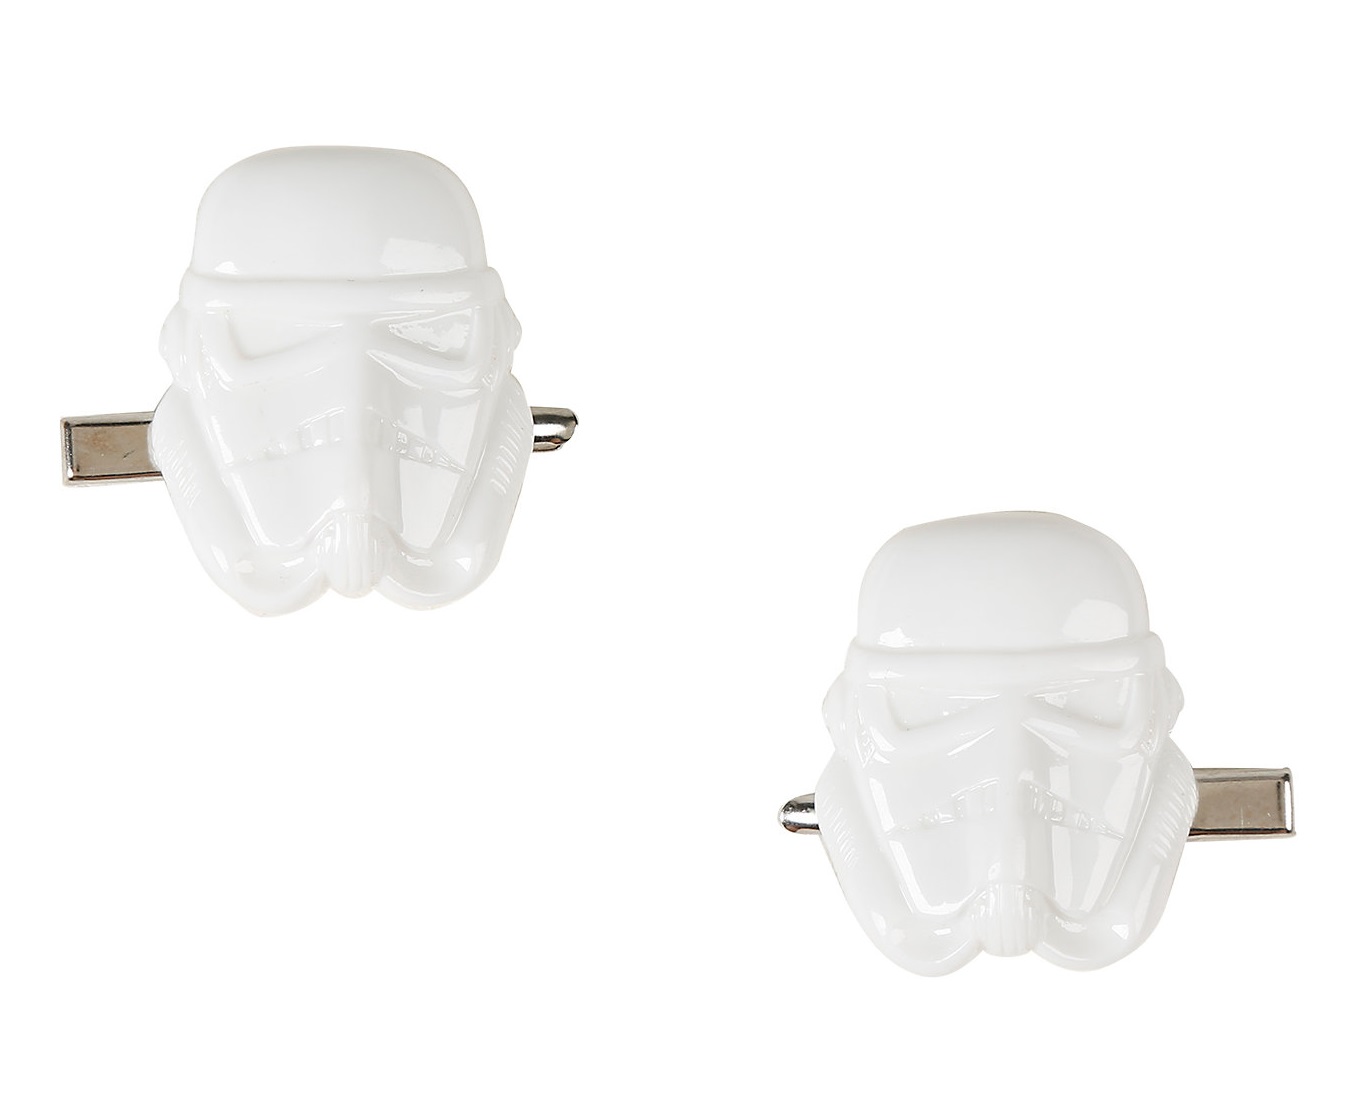 Hot Topic - Loungefly Stormtrooper helmet hair clip set